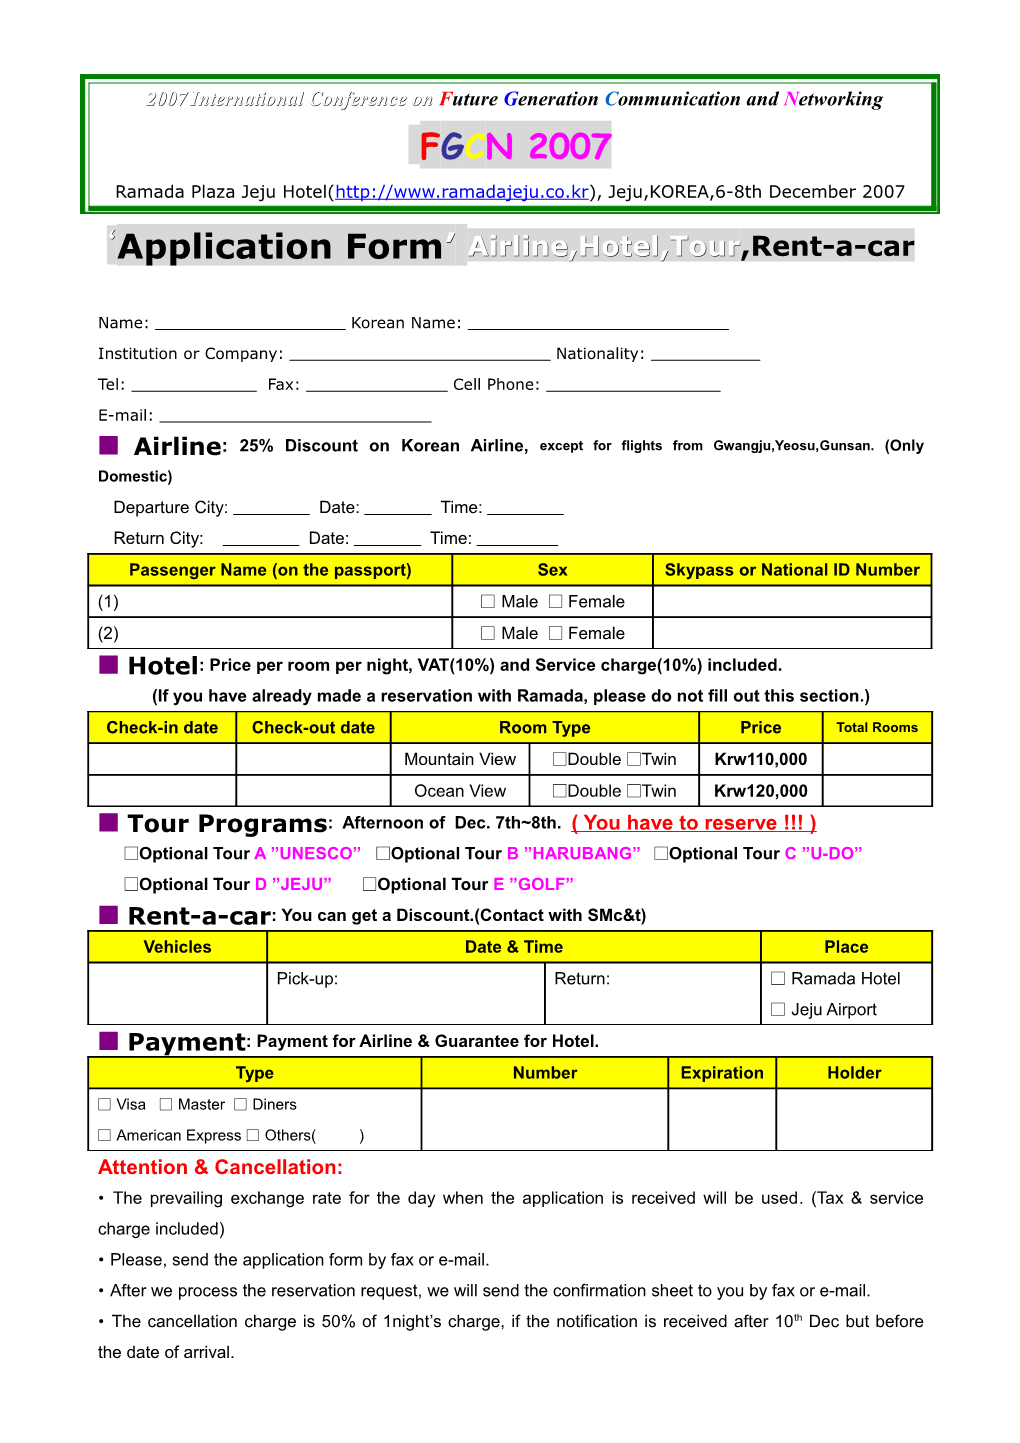 2007 ICAMD Application Form